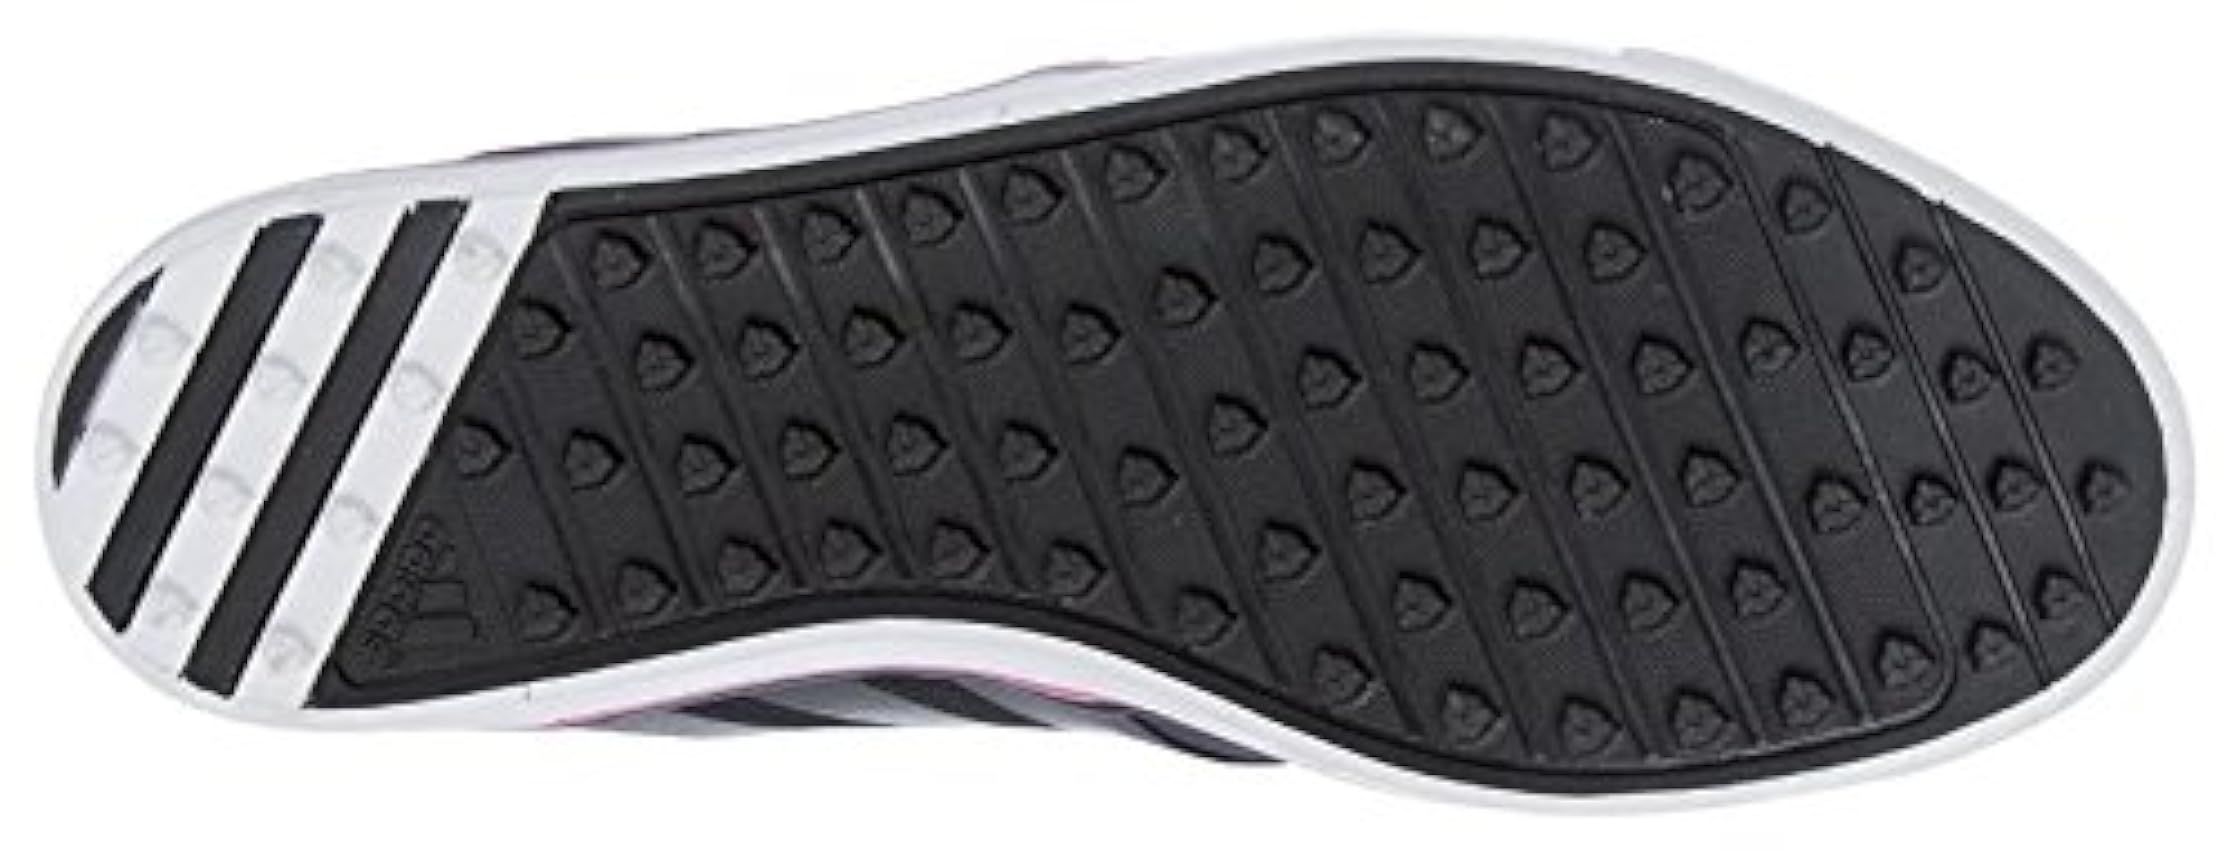 adidas W Adicross SL Chaussures pour femme Noir/gris/rose eEKUgxmp